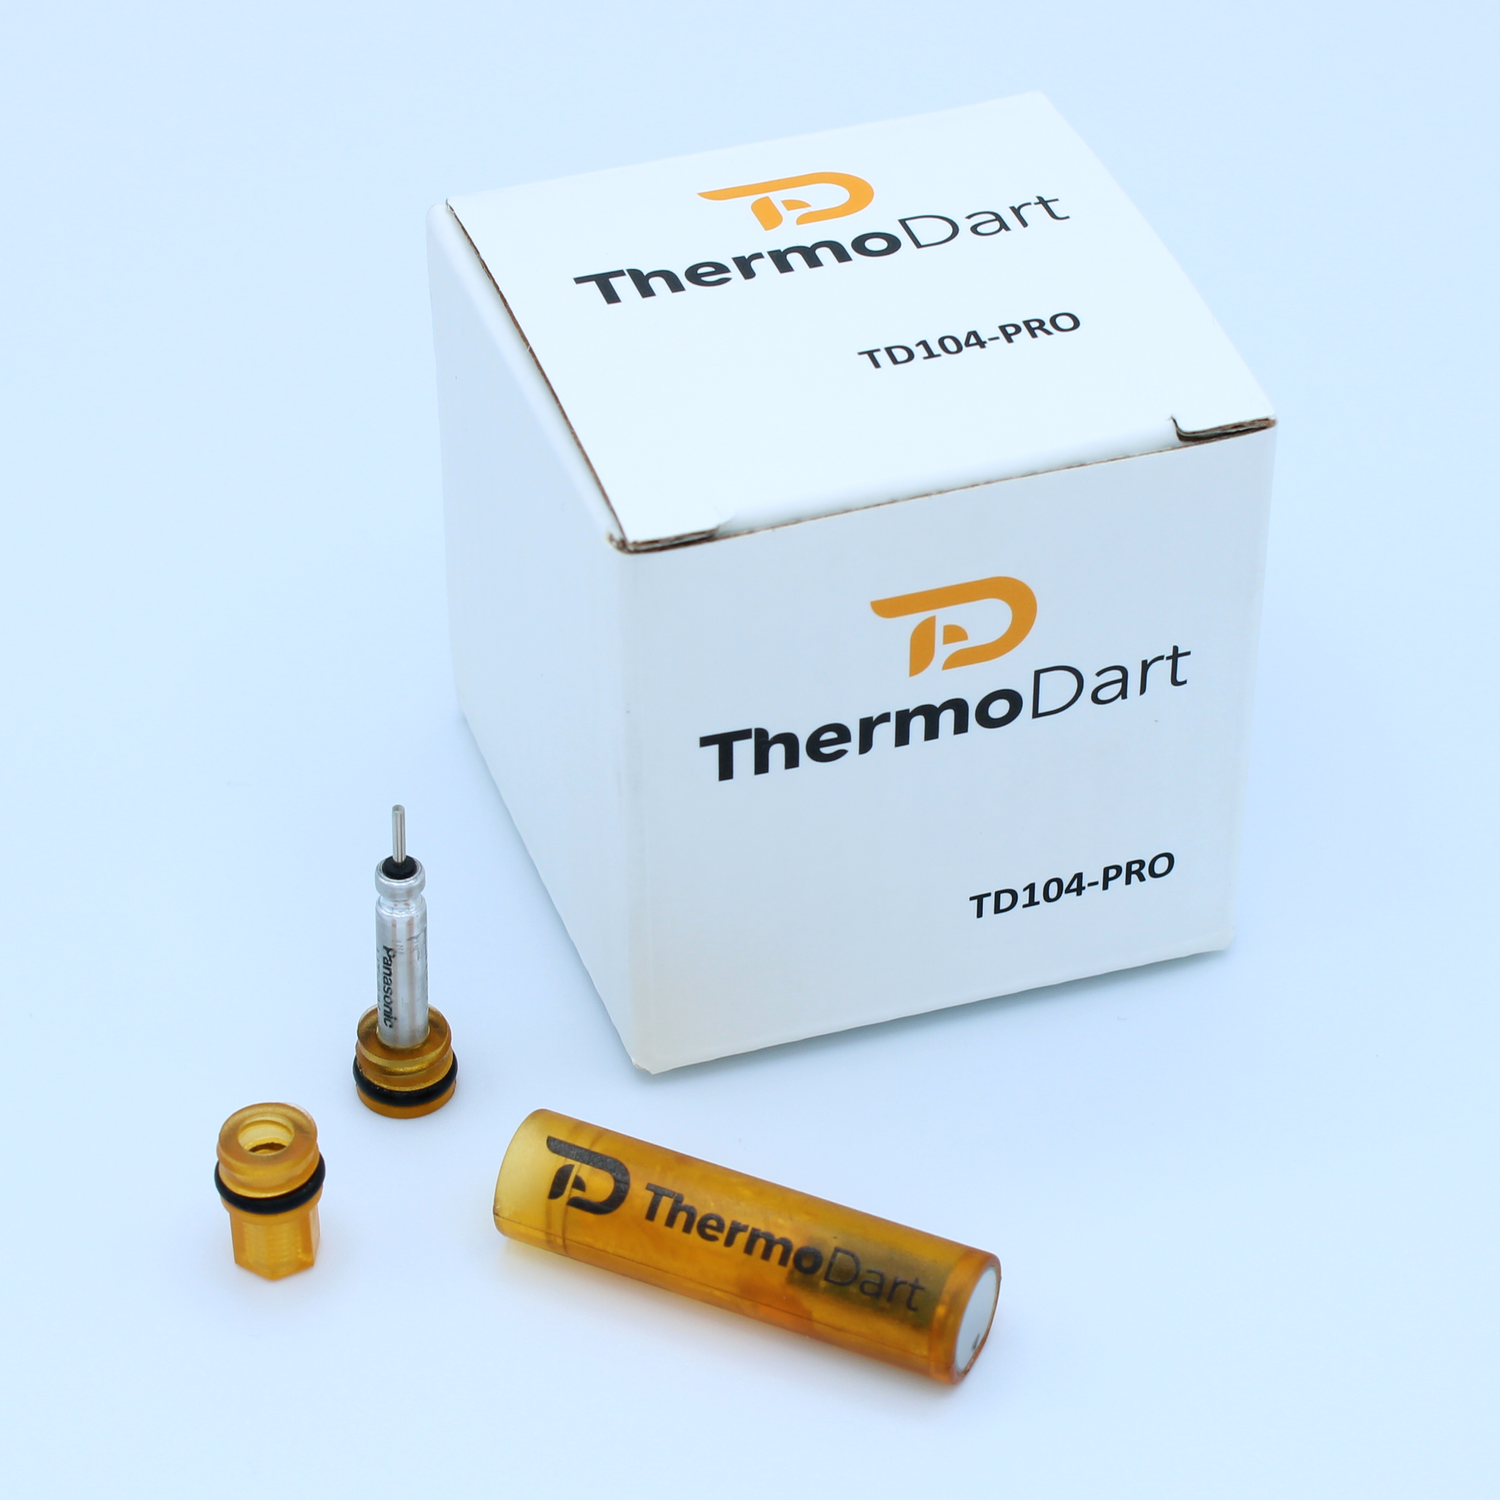 TD104-PRO — ThermoDart